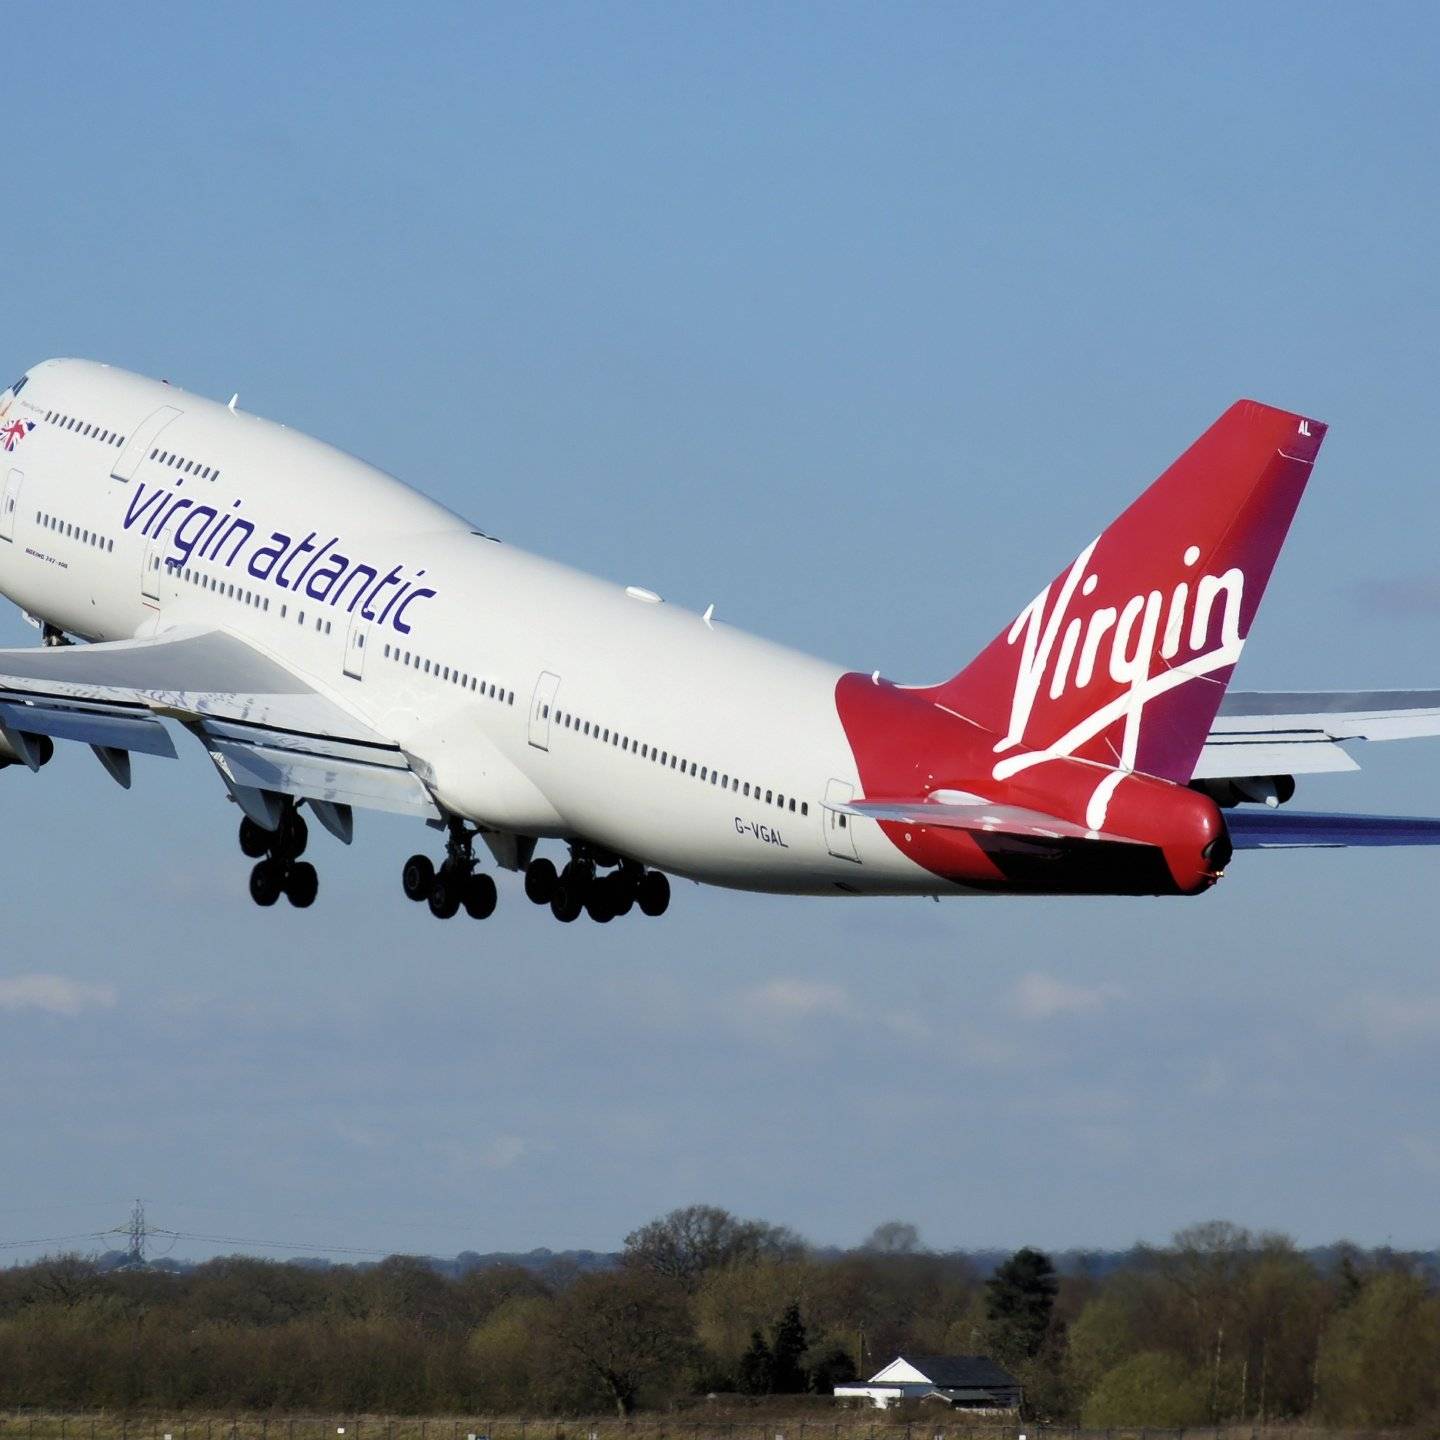 Virgin atlantic airlines – 4 star british airline